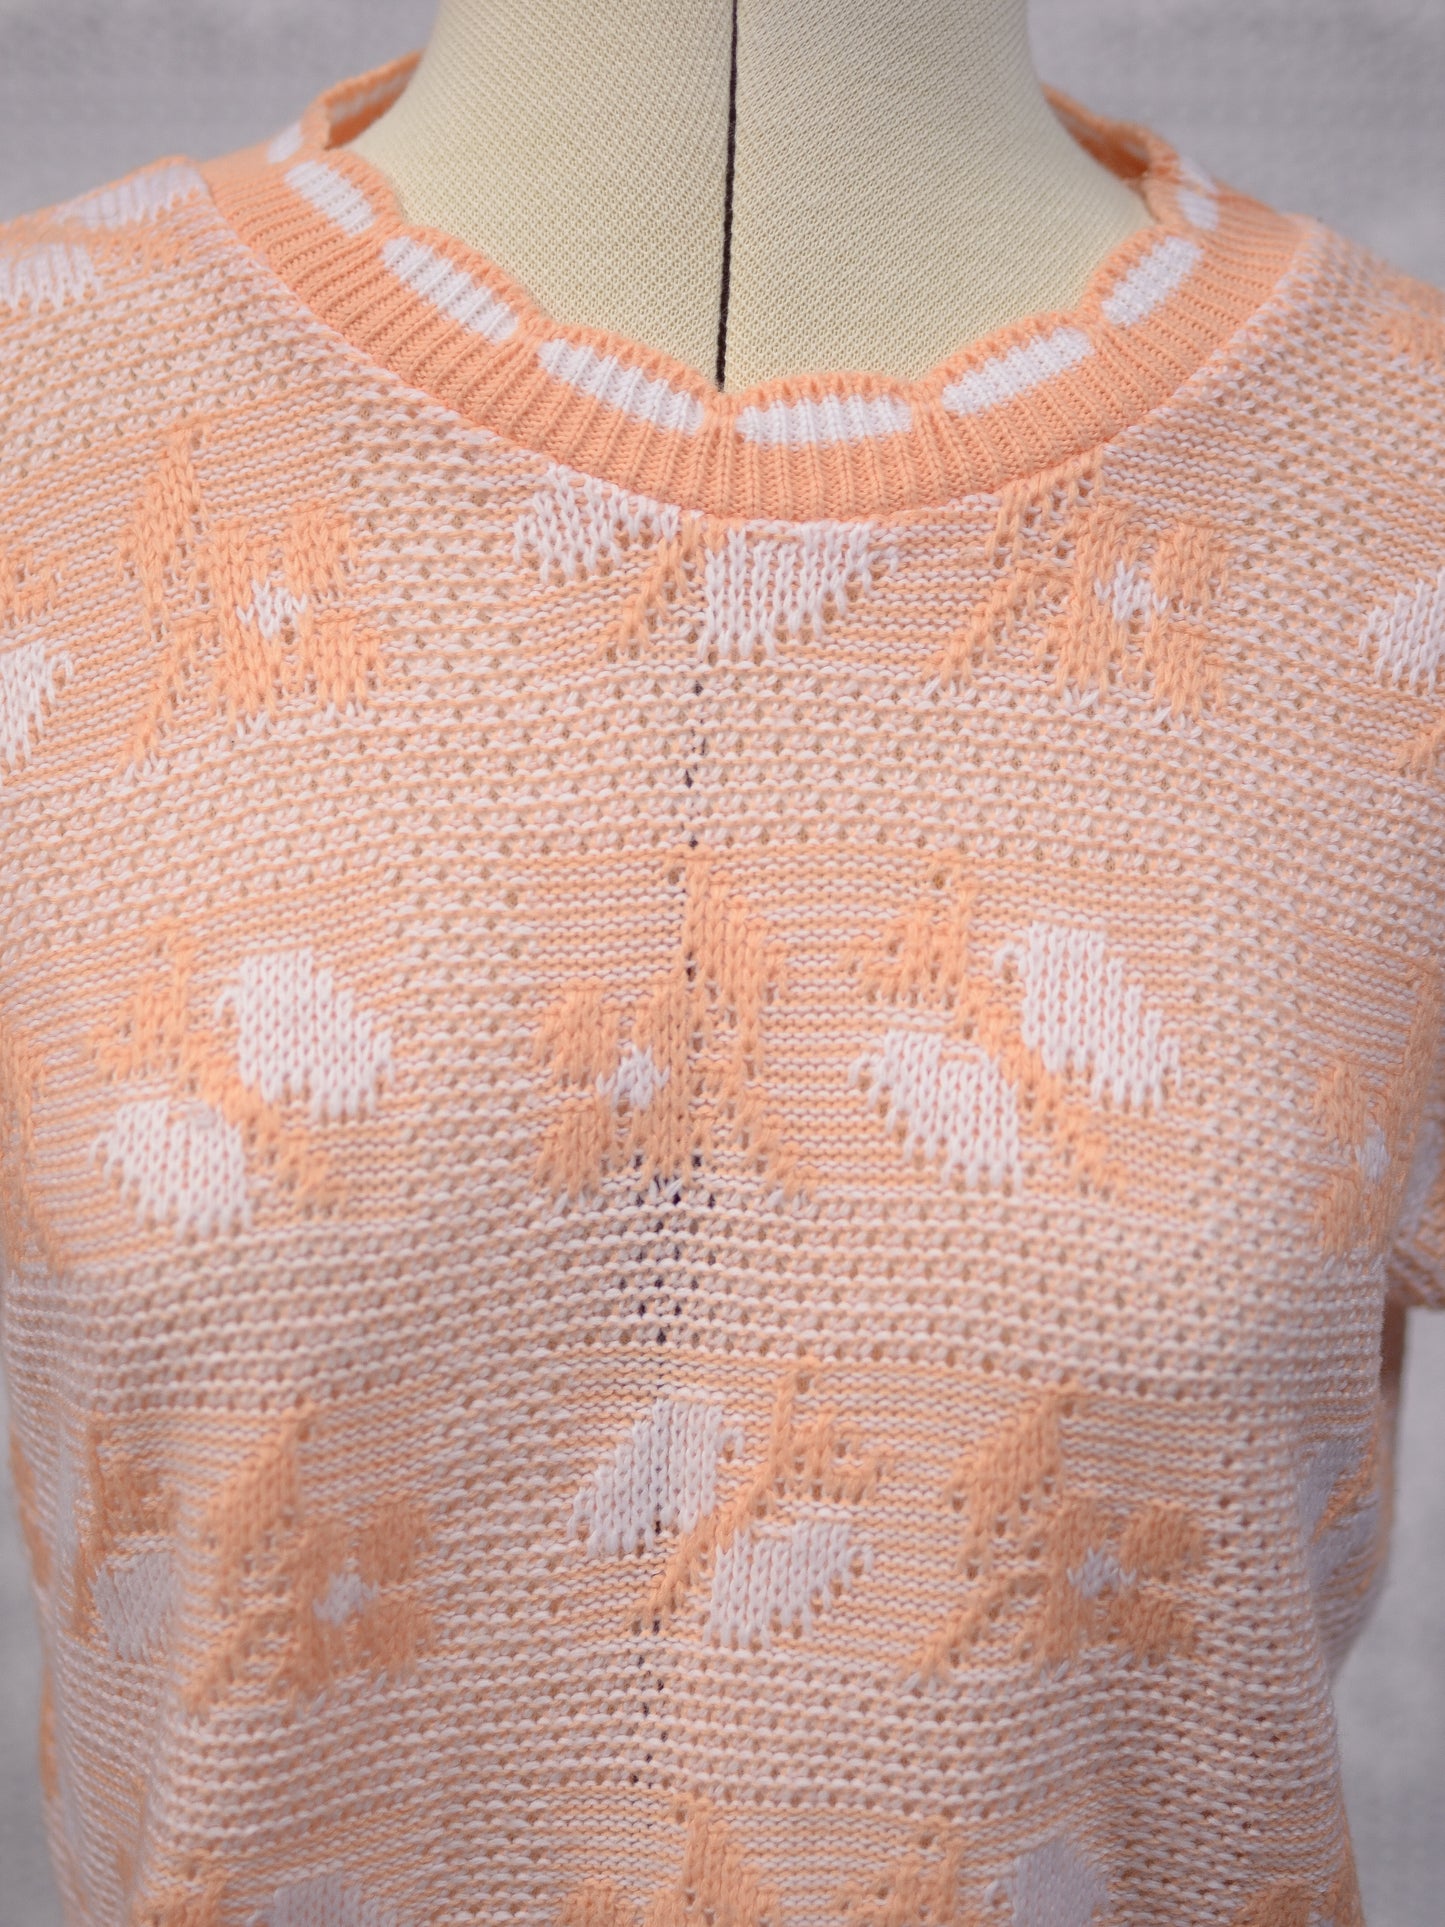 1980s peachy orange and white sleeveless jumper sweater vest